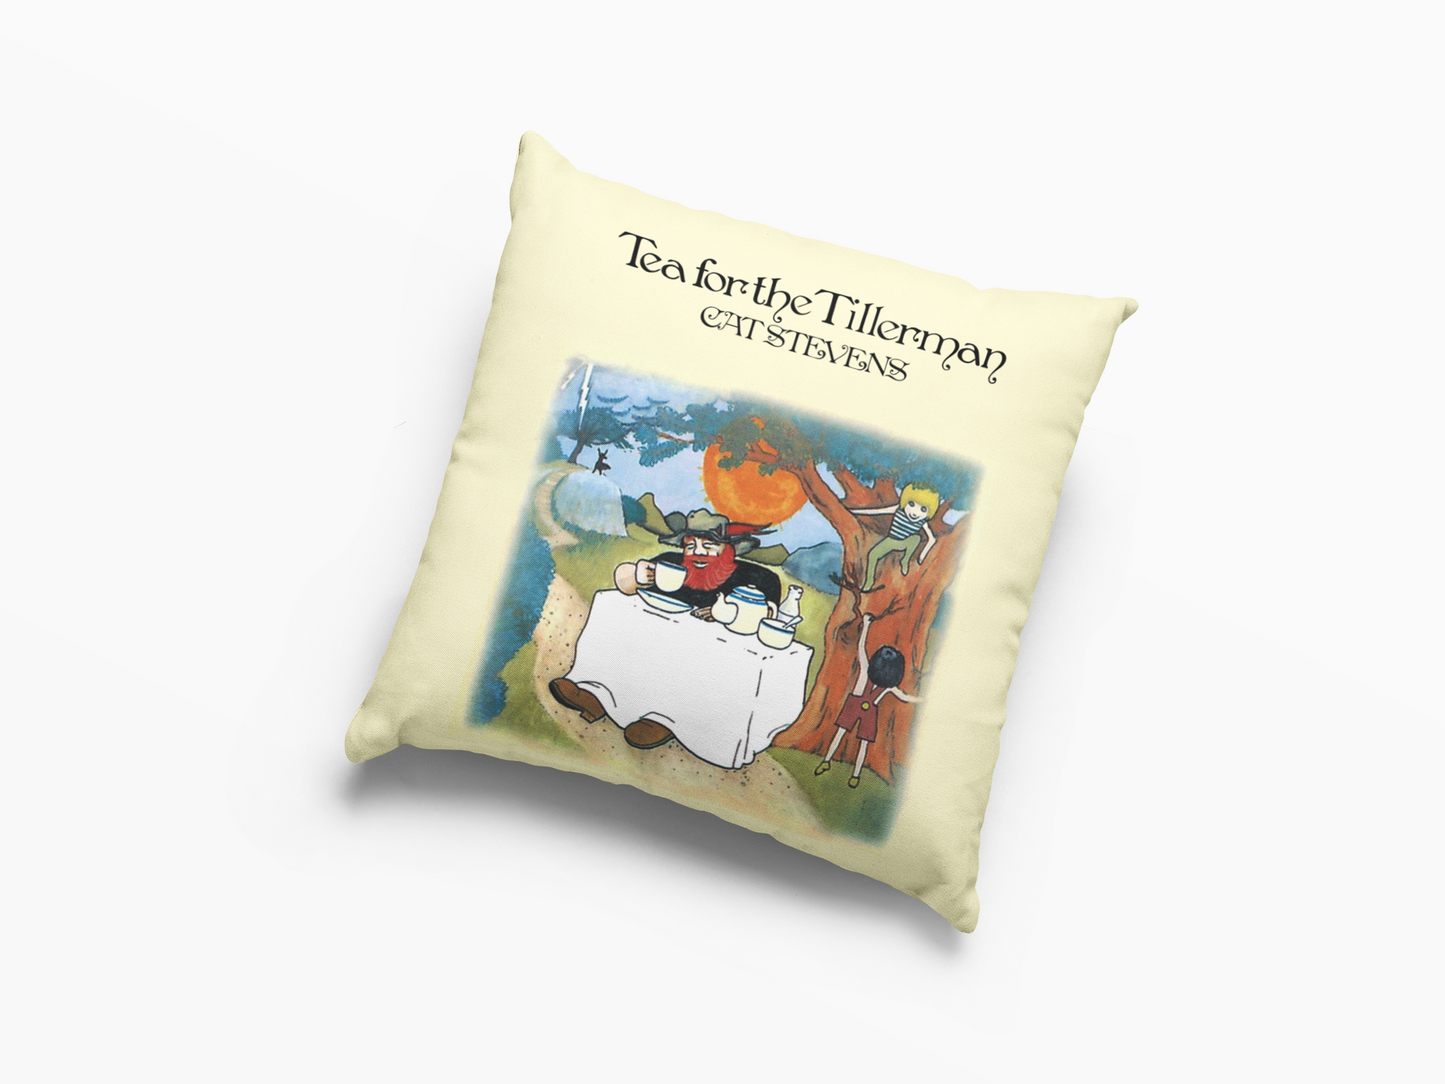 Cat Stevens Tea for Tillerman Cushion Case / Pillow Case